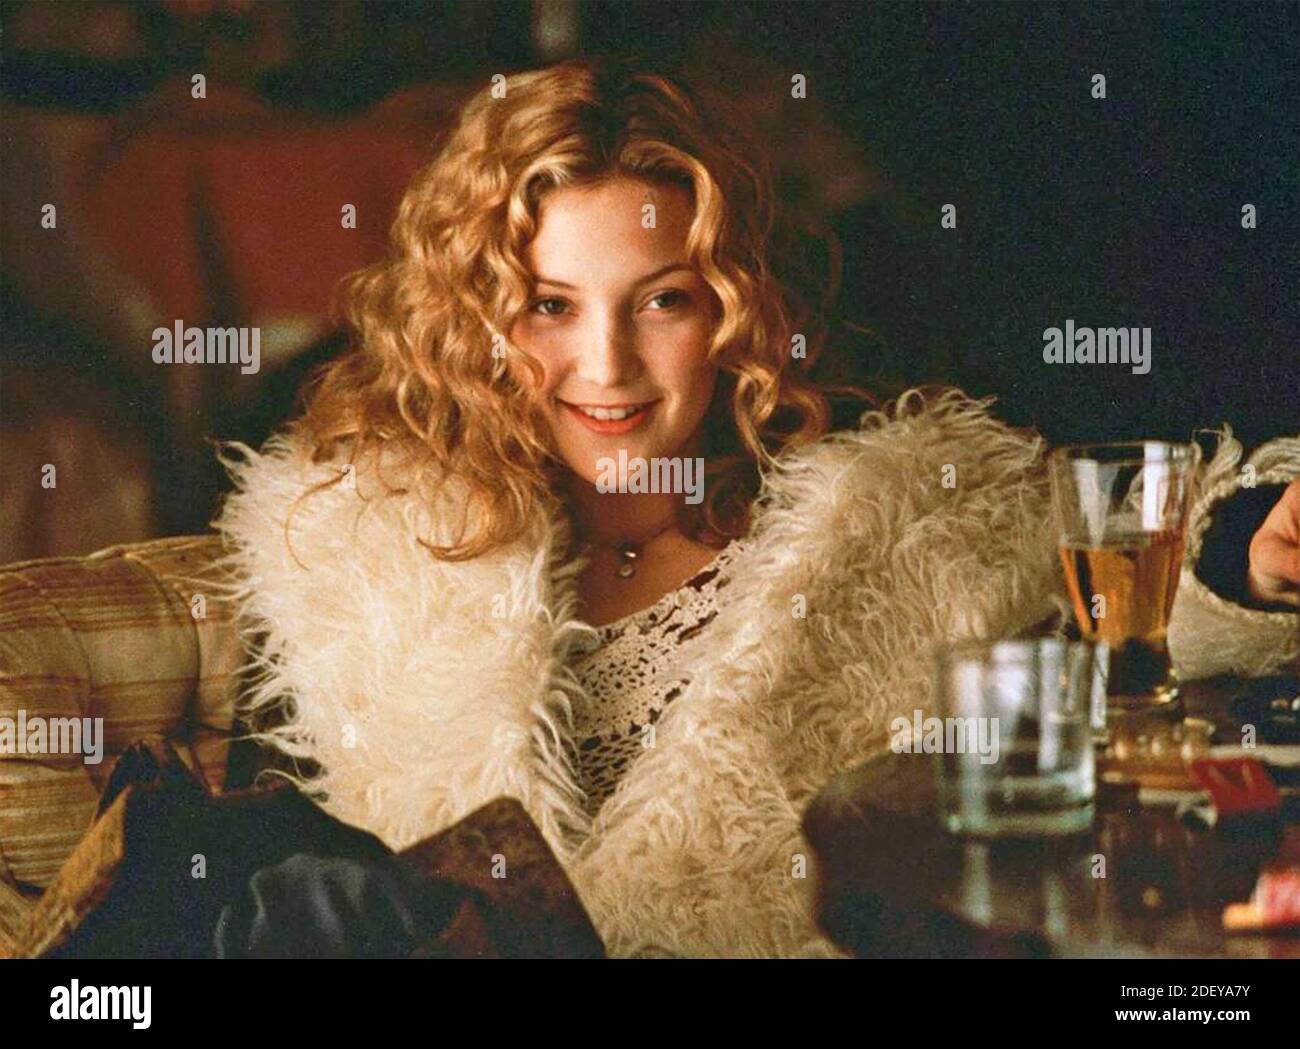 FAST BERÜHMTE 2000 Sony Pictures Veröffentlichung Film mit Kate Hudson Stockfoto